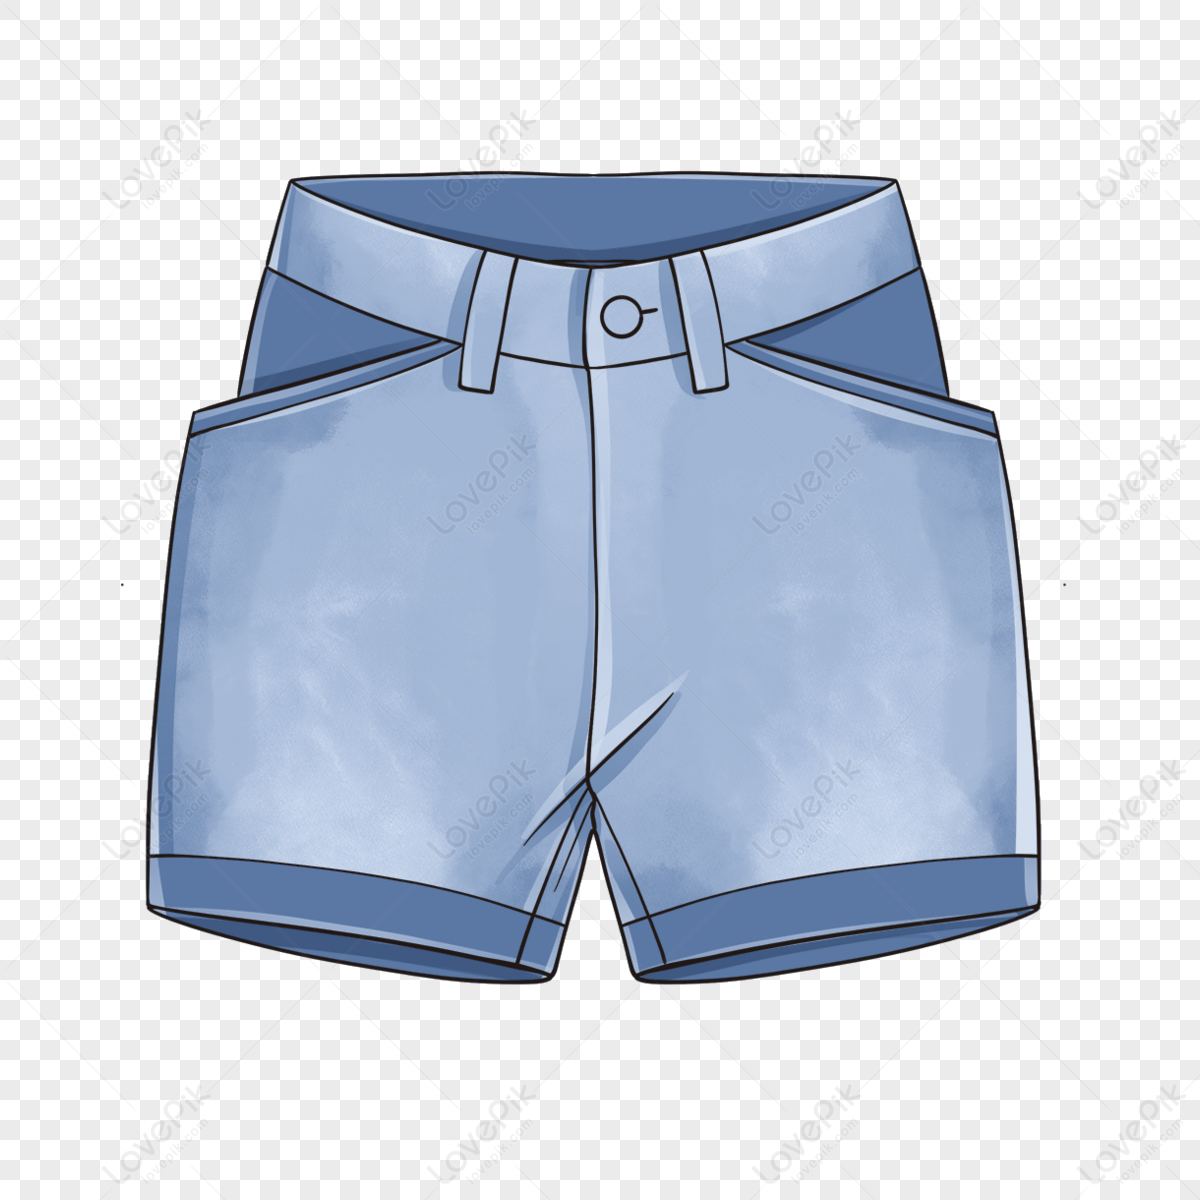 Blue denim shorts with leather belt and back zipper pocket png download -  1848*1804 - Free Transparent Blue Jean Shorts png Download. - CleanPNG /  KissPNG